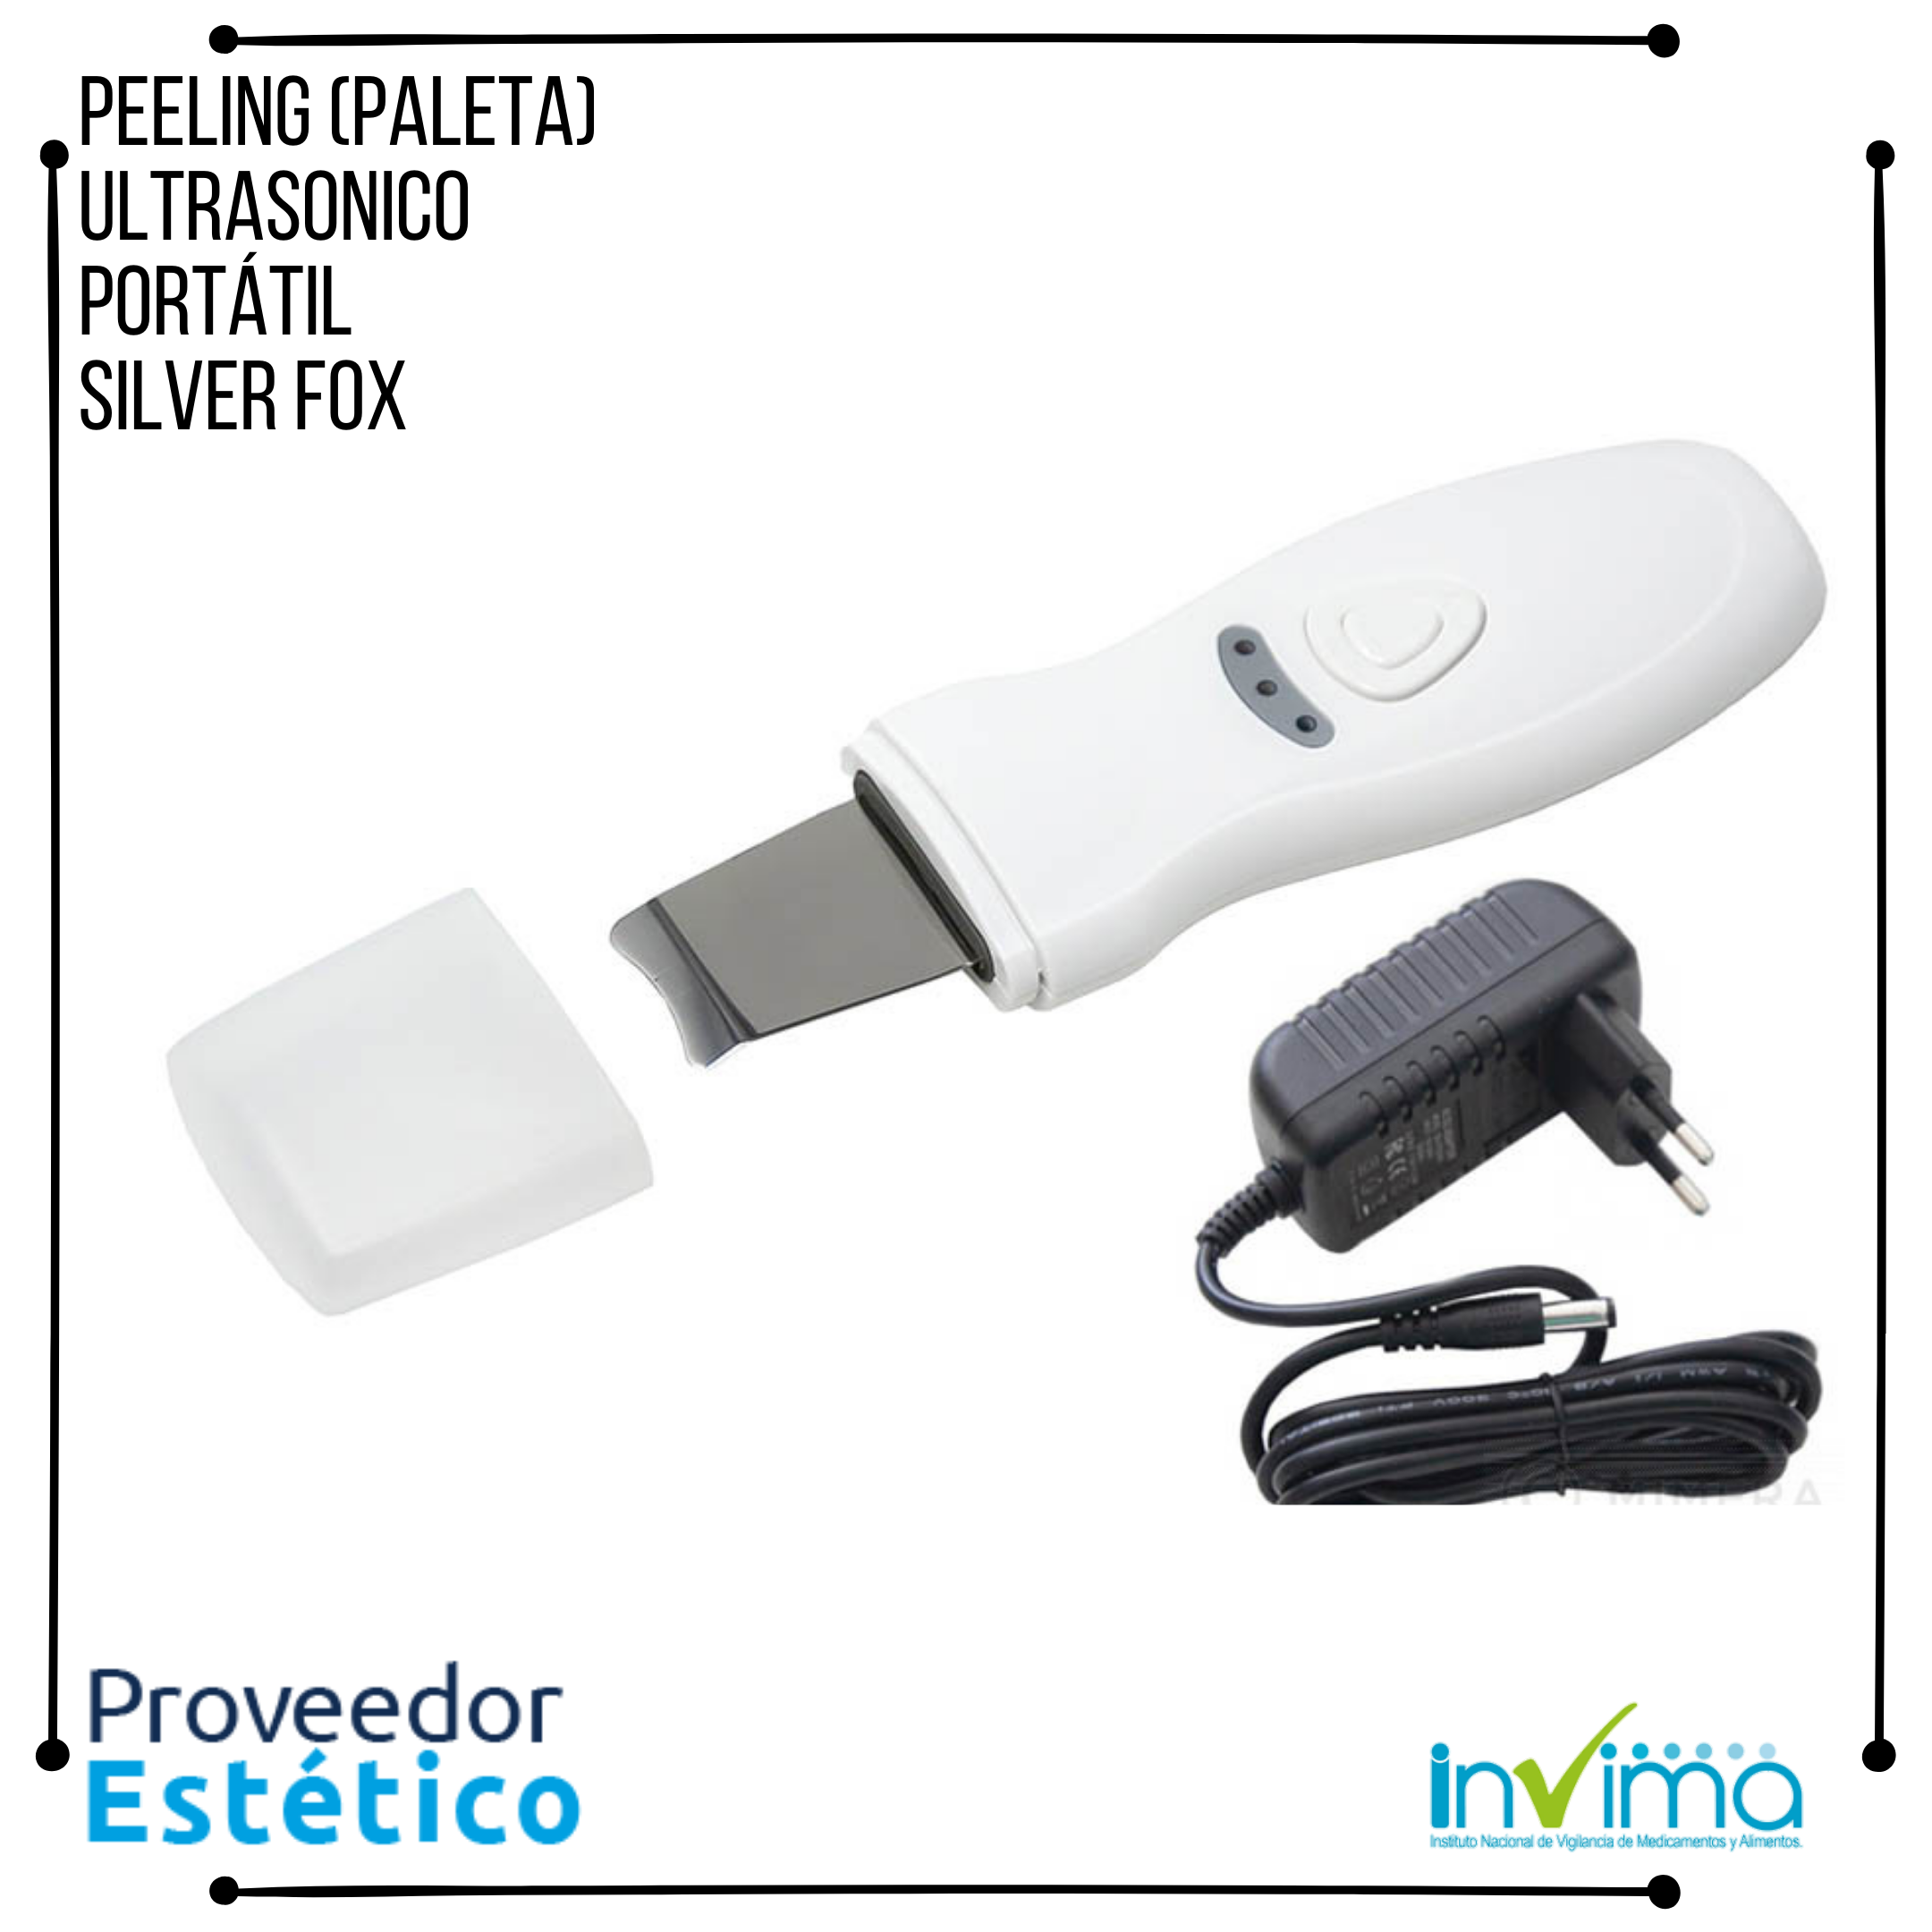 Peeling (paleta) Ultrasonica portátil Silver Fox 